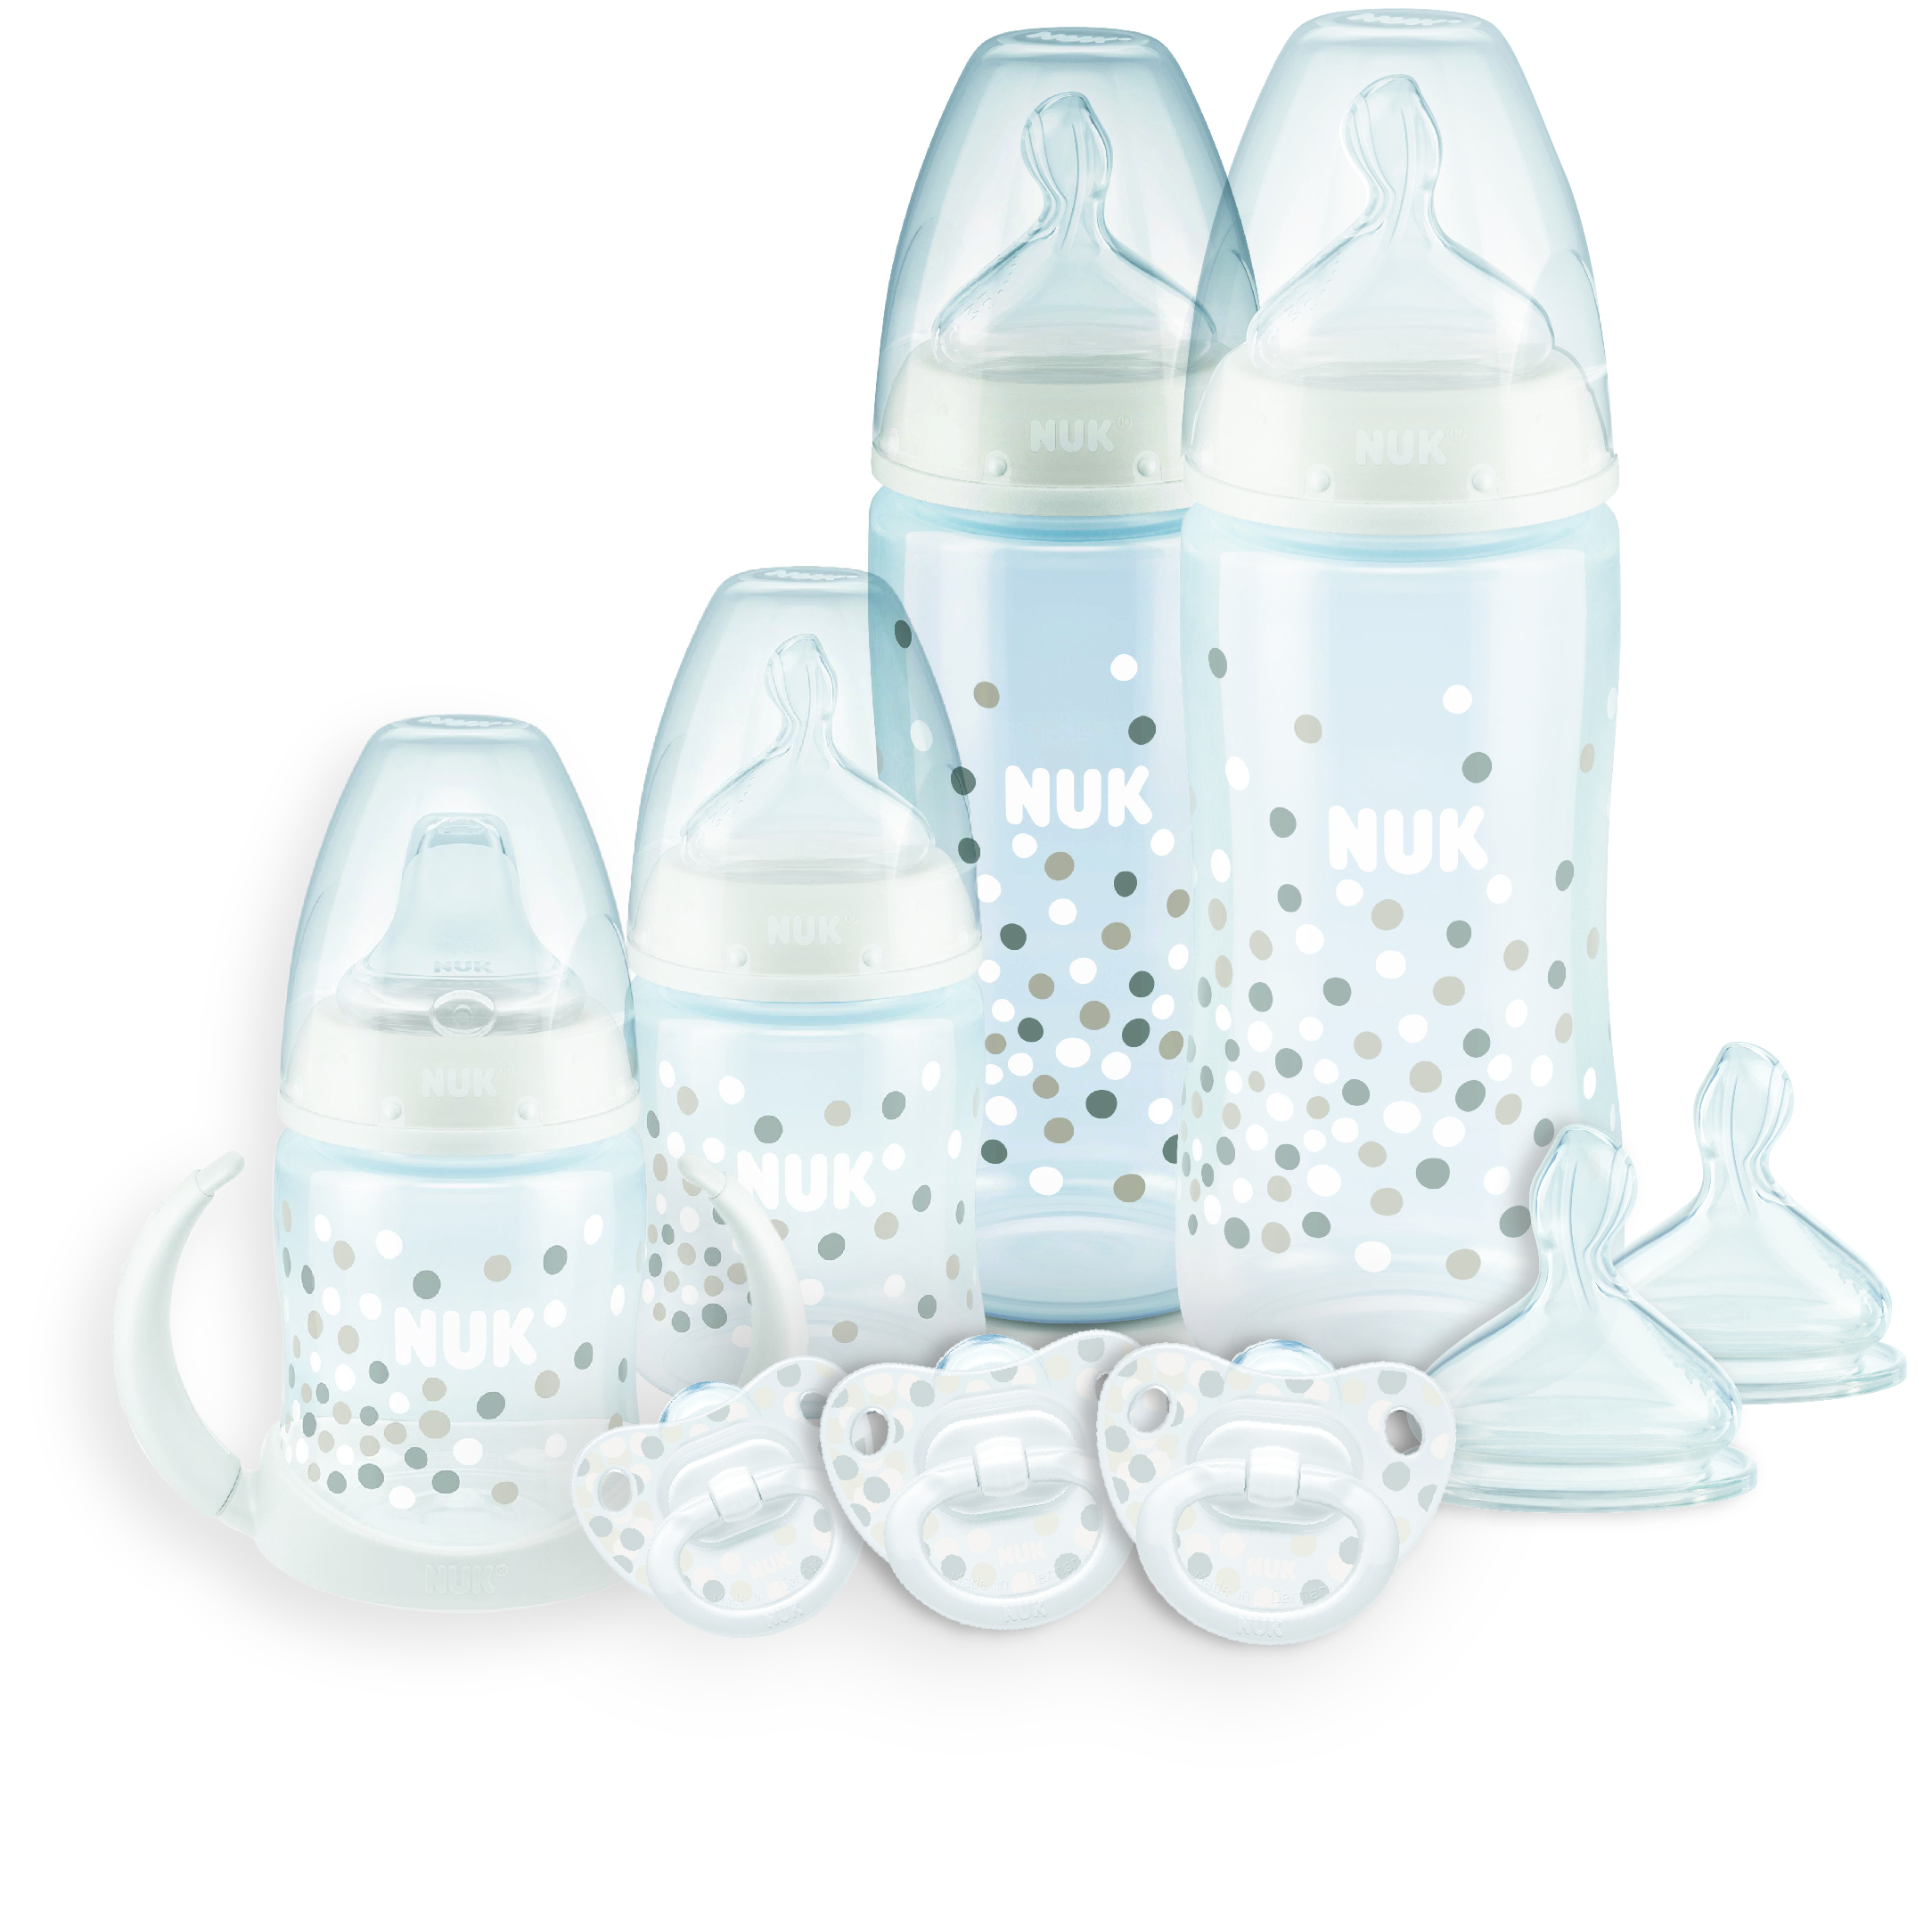 NUK® Smooth Flow Bottle Newborn Gift Set Product Image 4 of 10